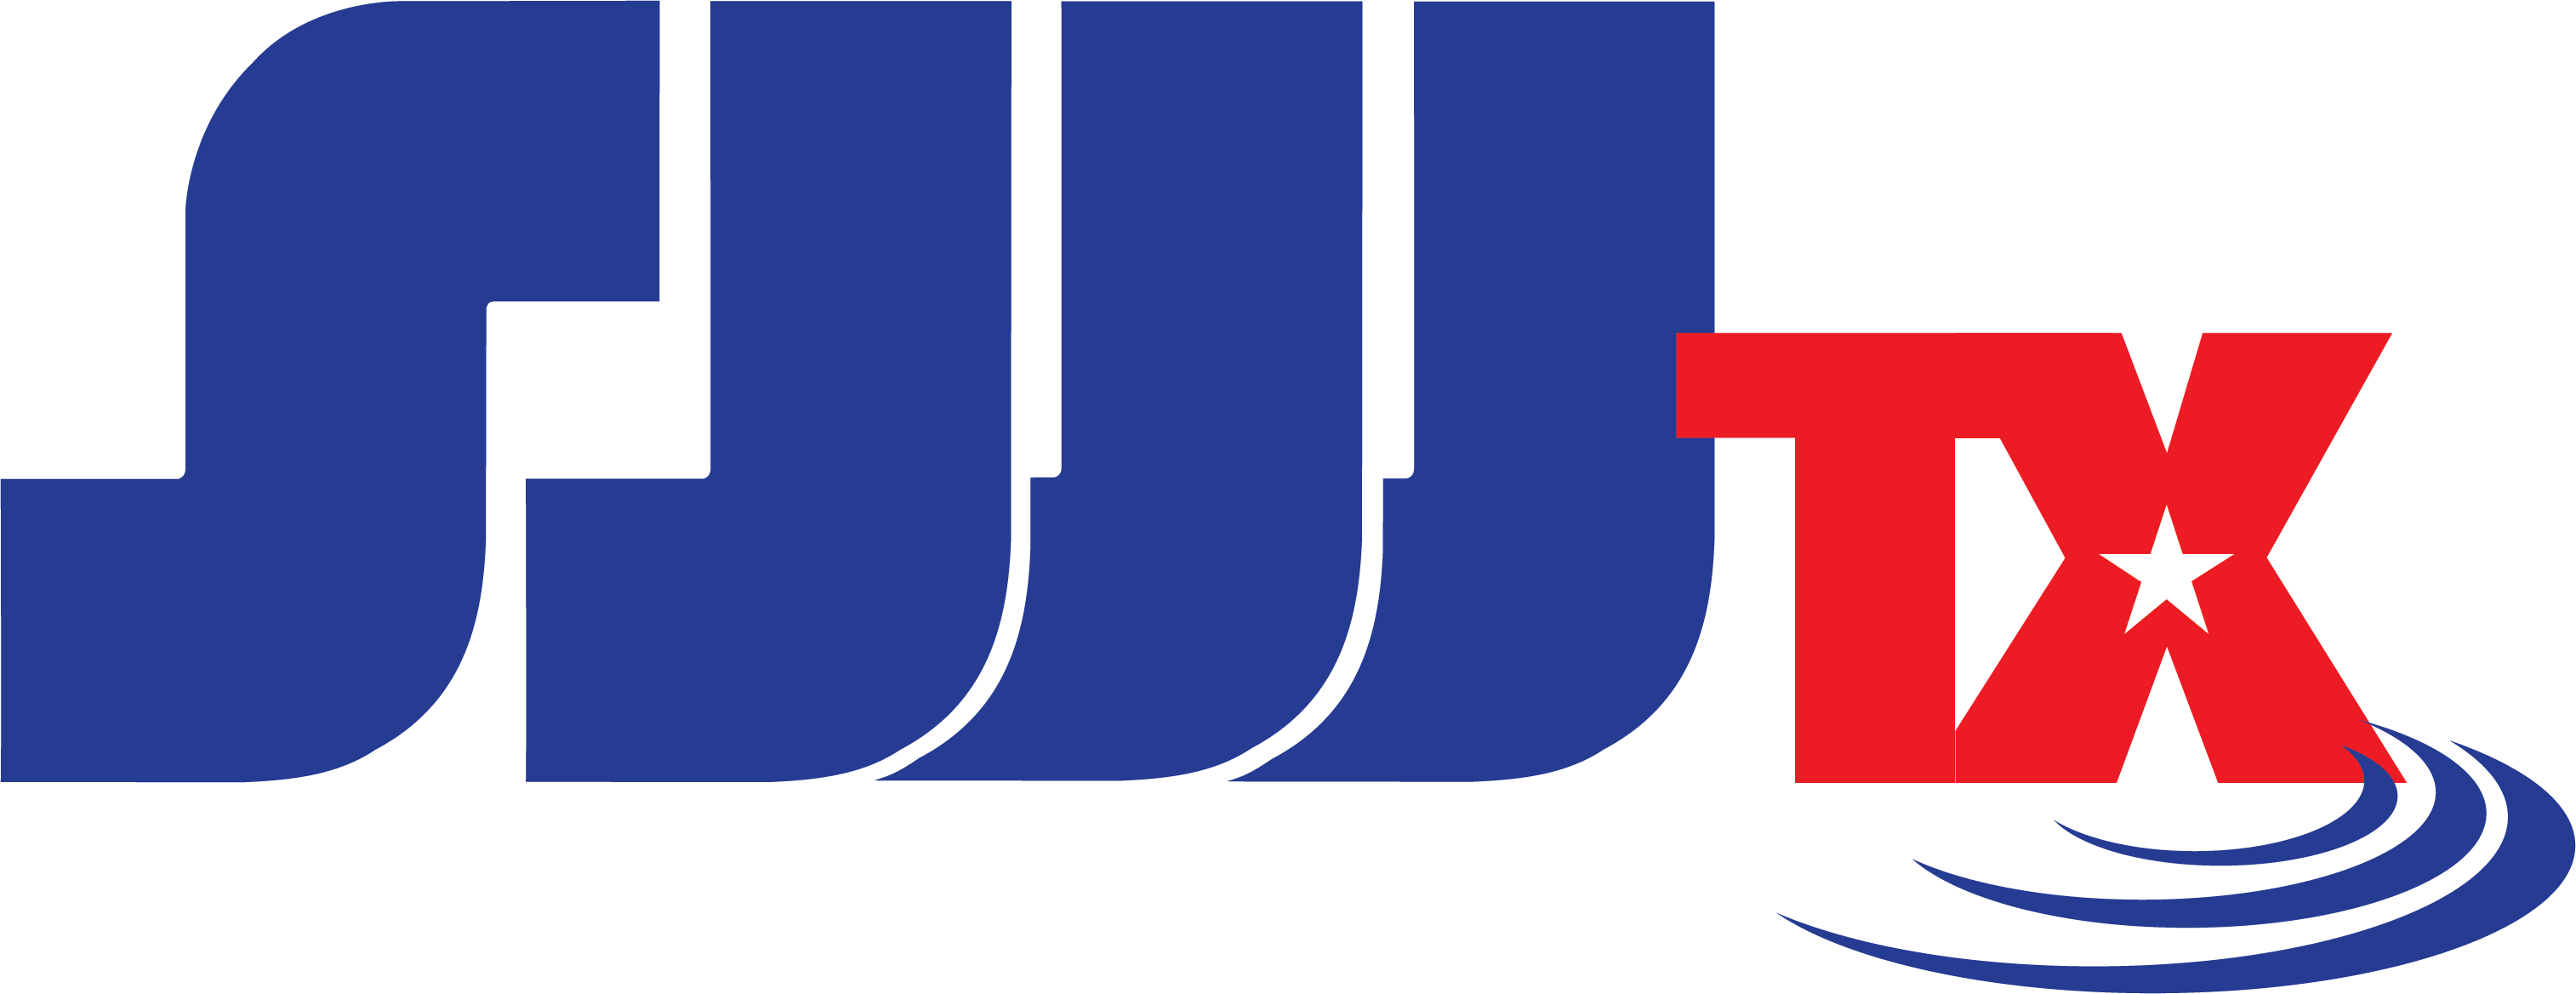 sjwtx logo